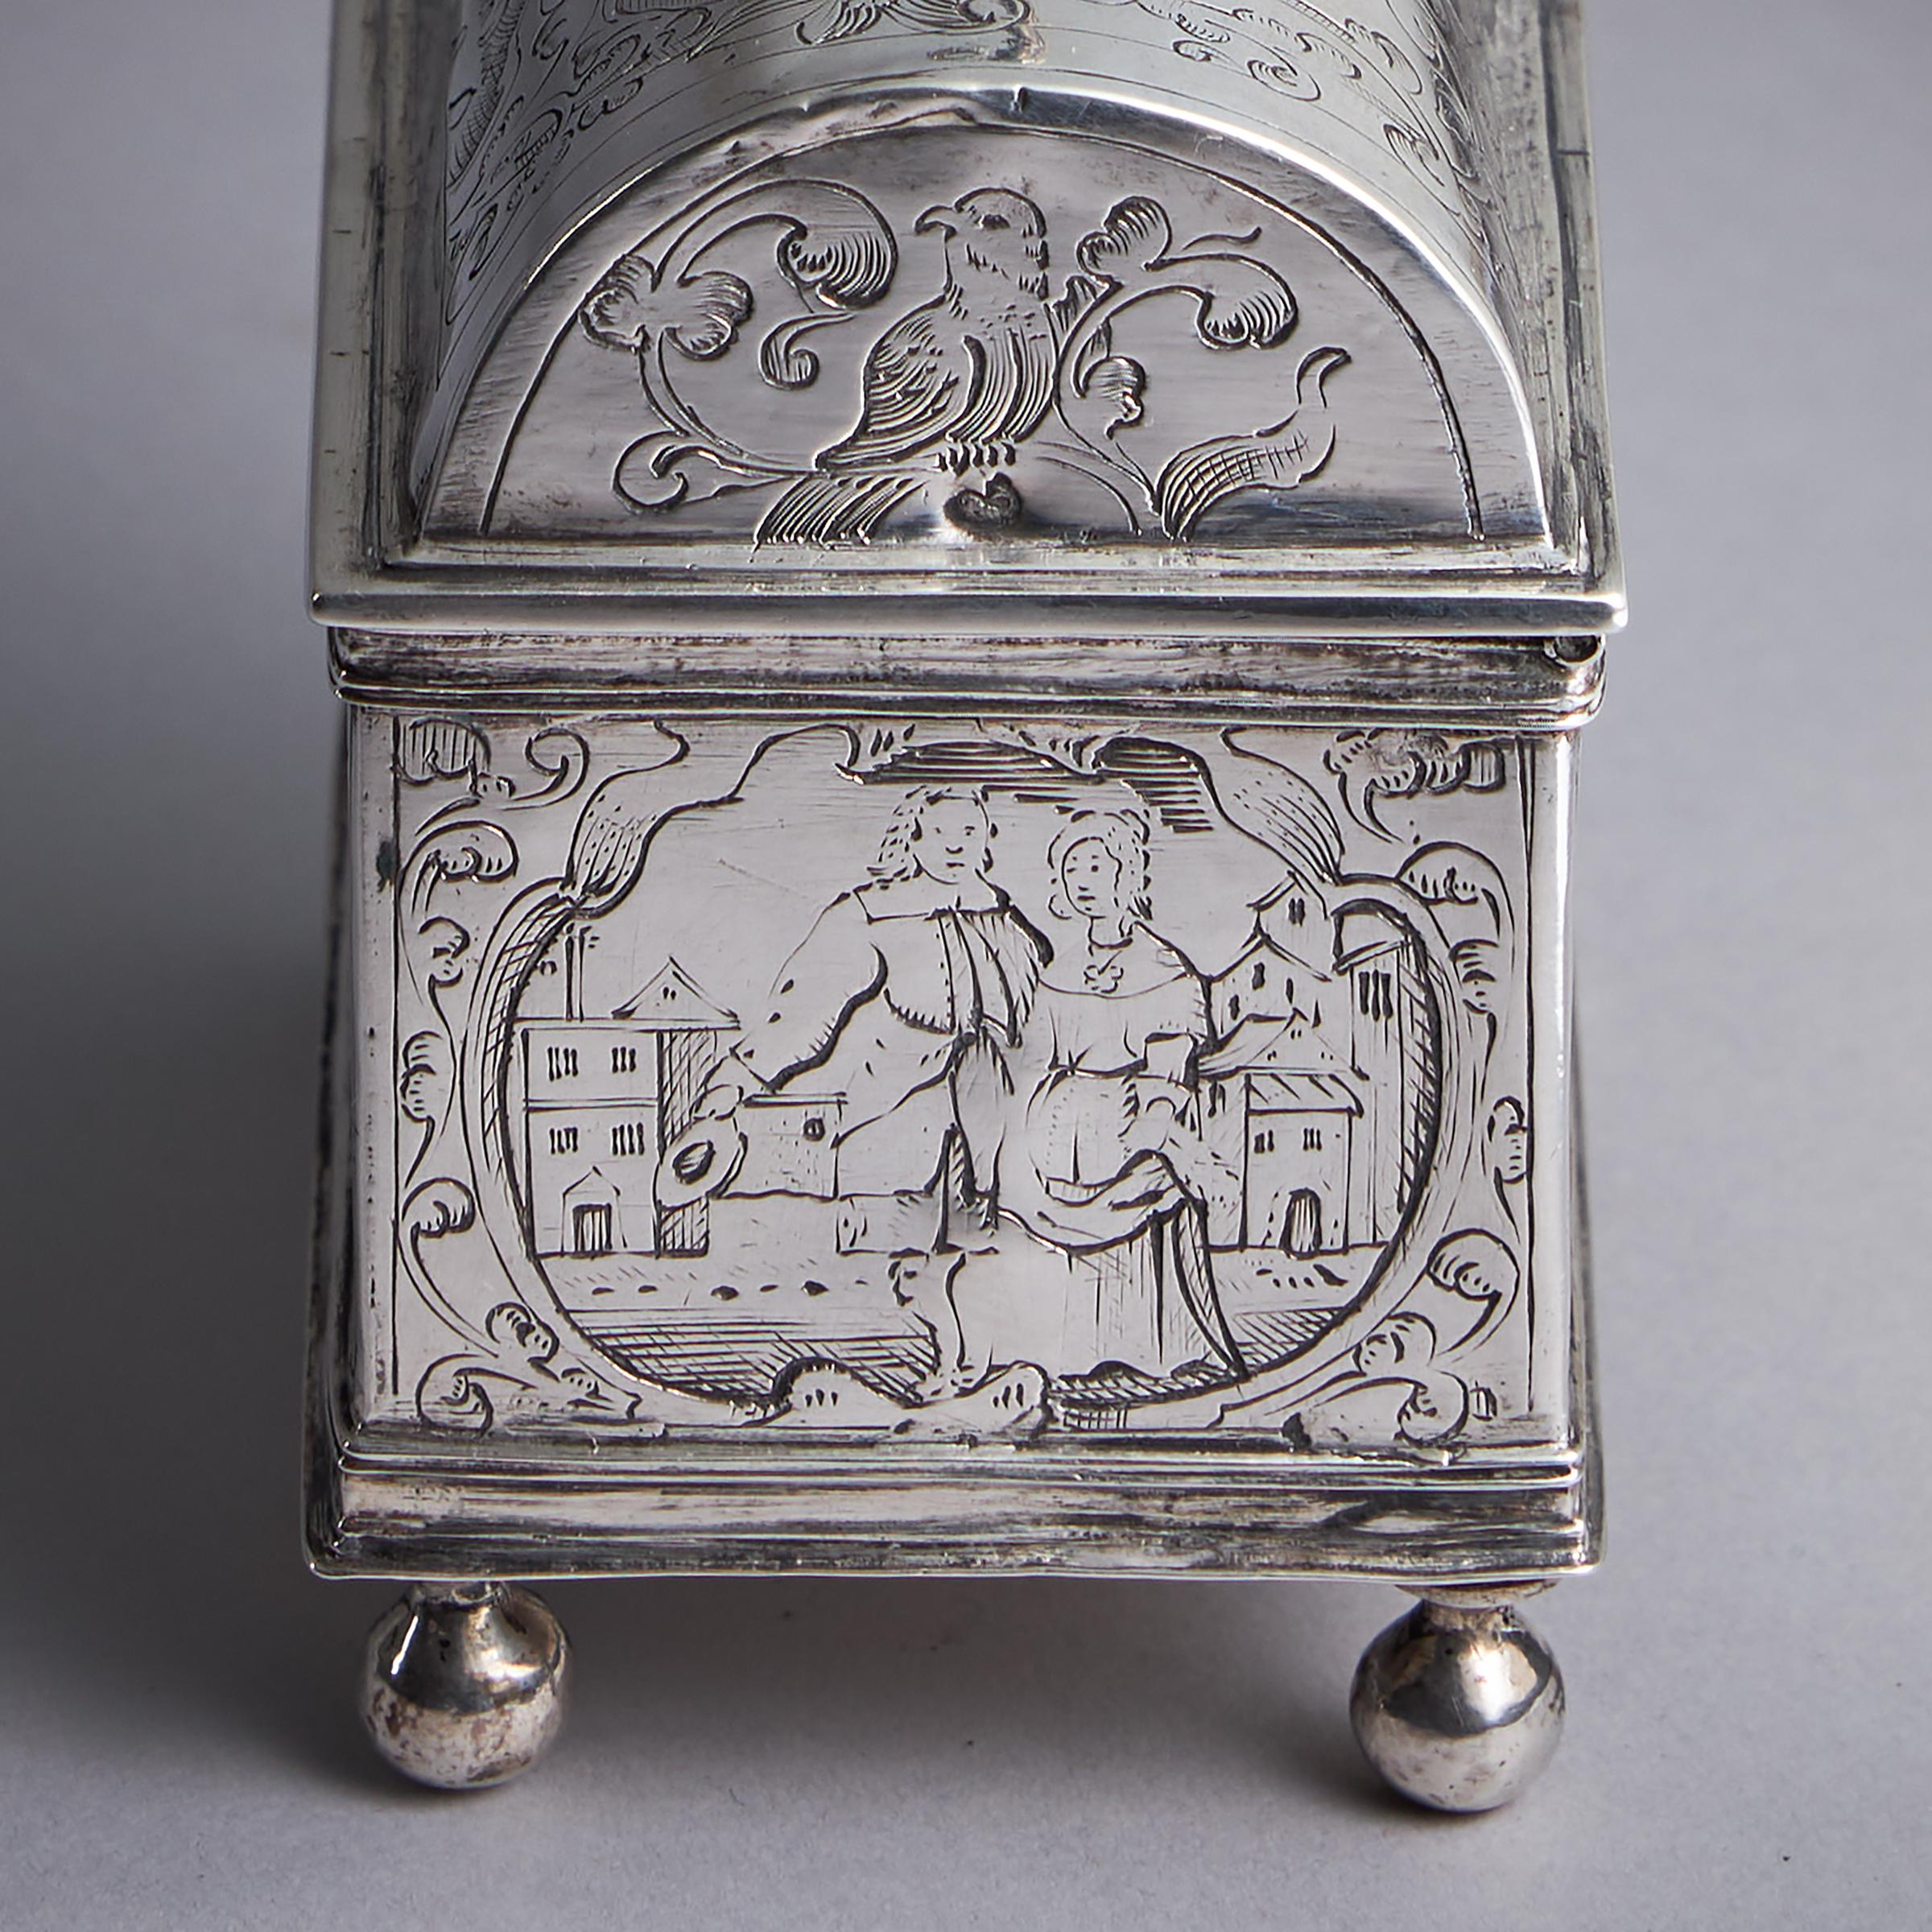 A museum-grade mid-17th century Dutch silver marriage casket or knottekistje, circa 1660 9